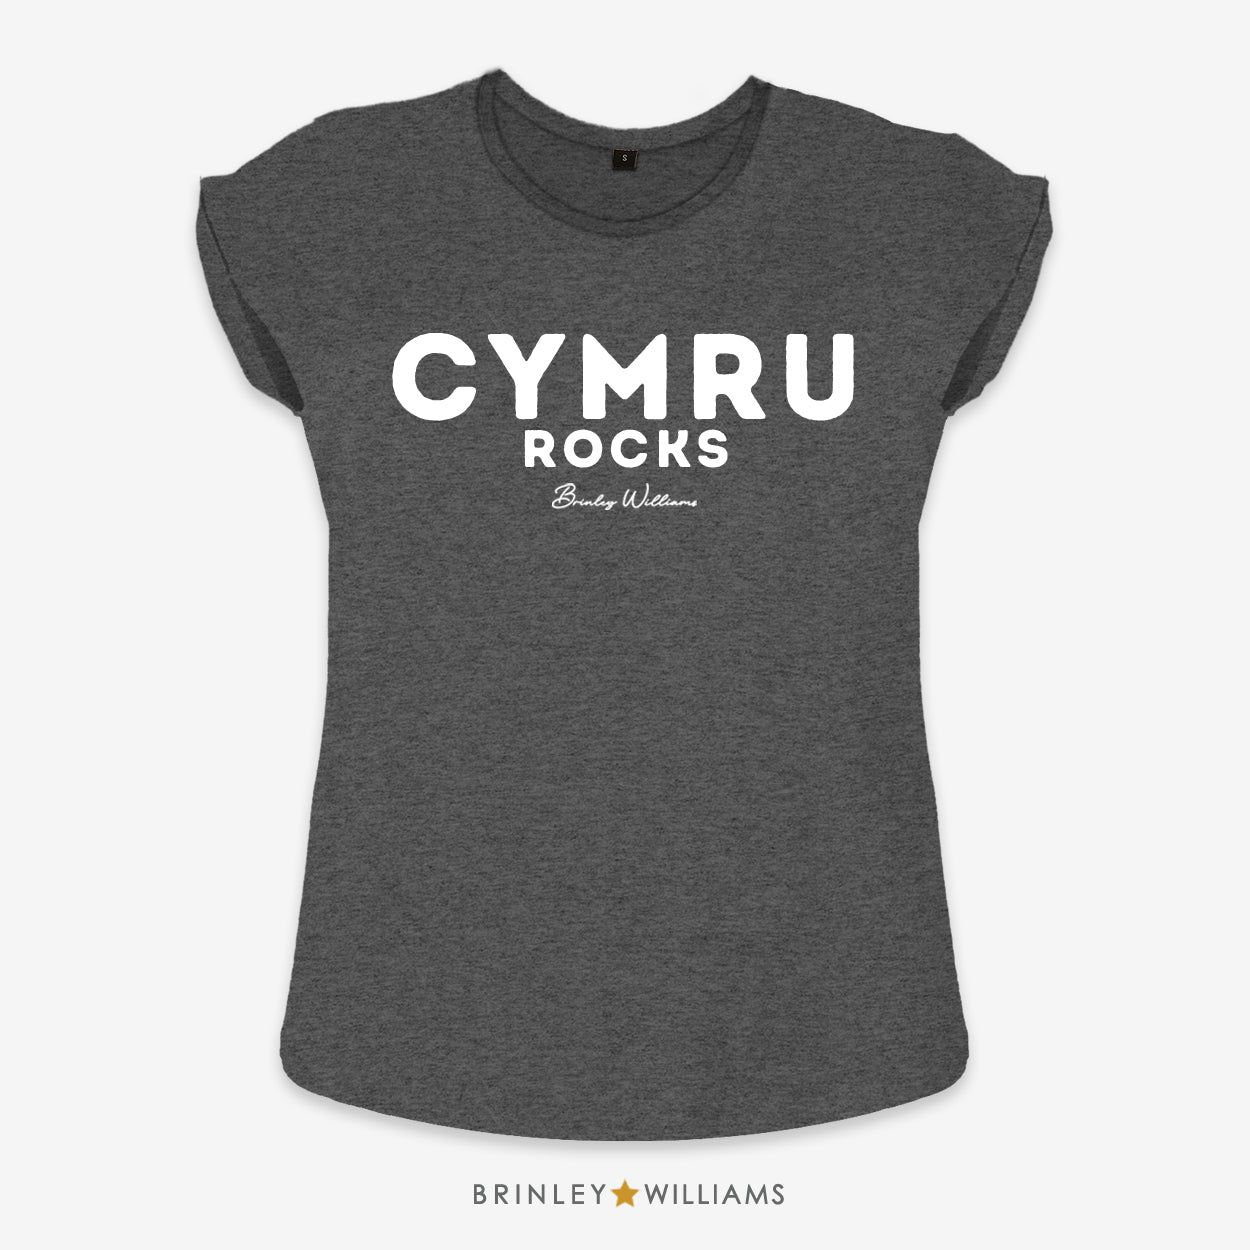 Cymru Rocks Rolled Sleeve T-shirt - Charcoal